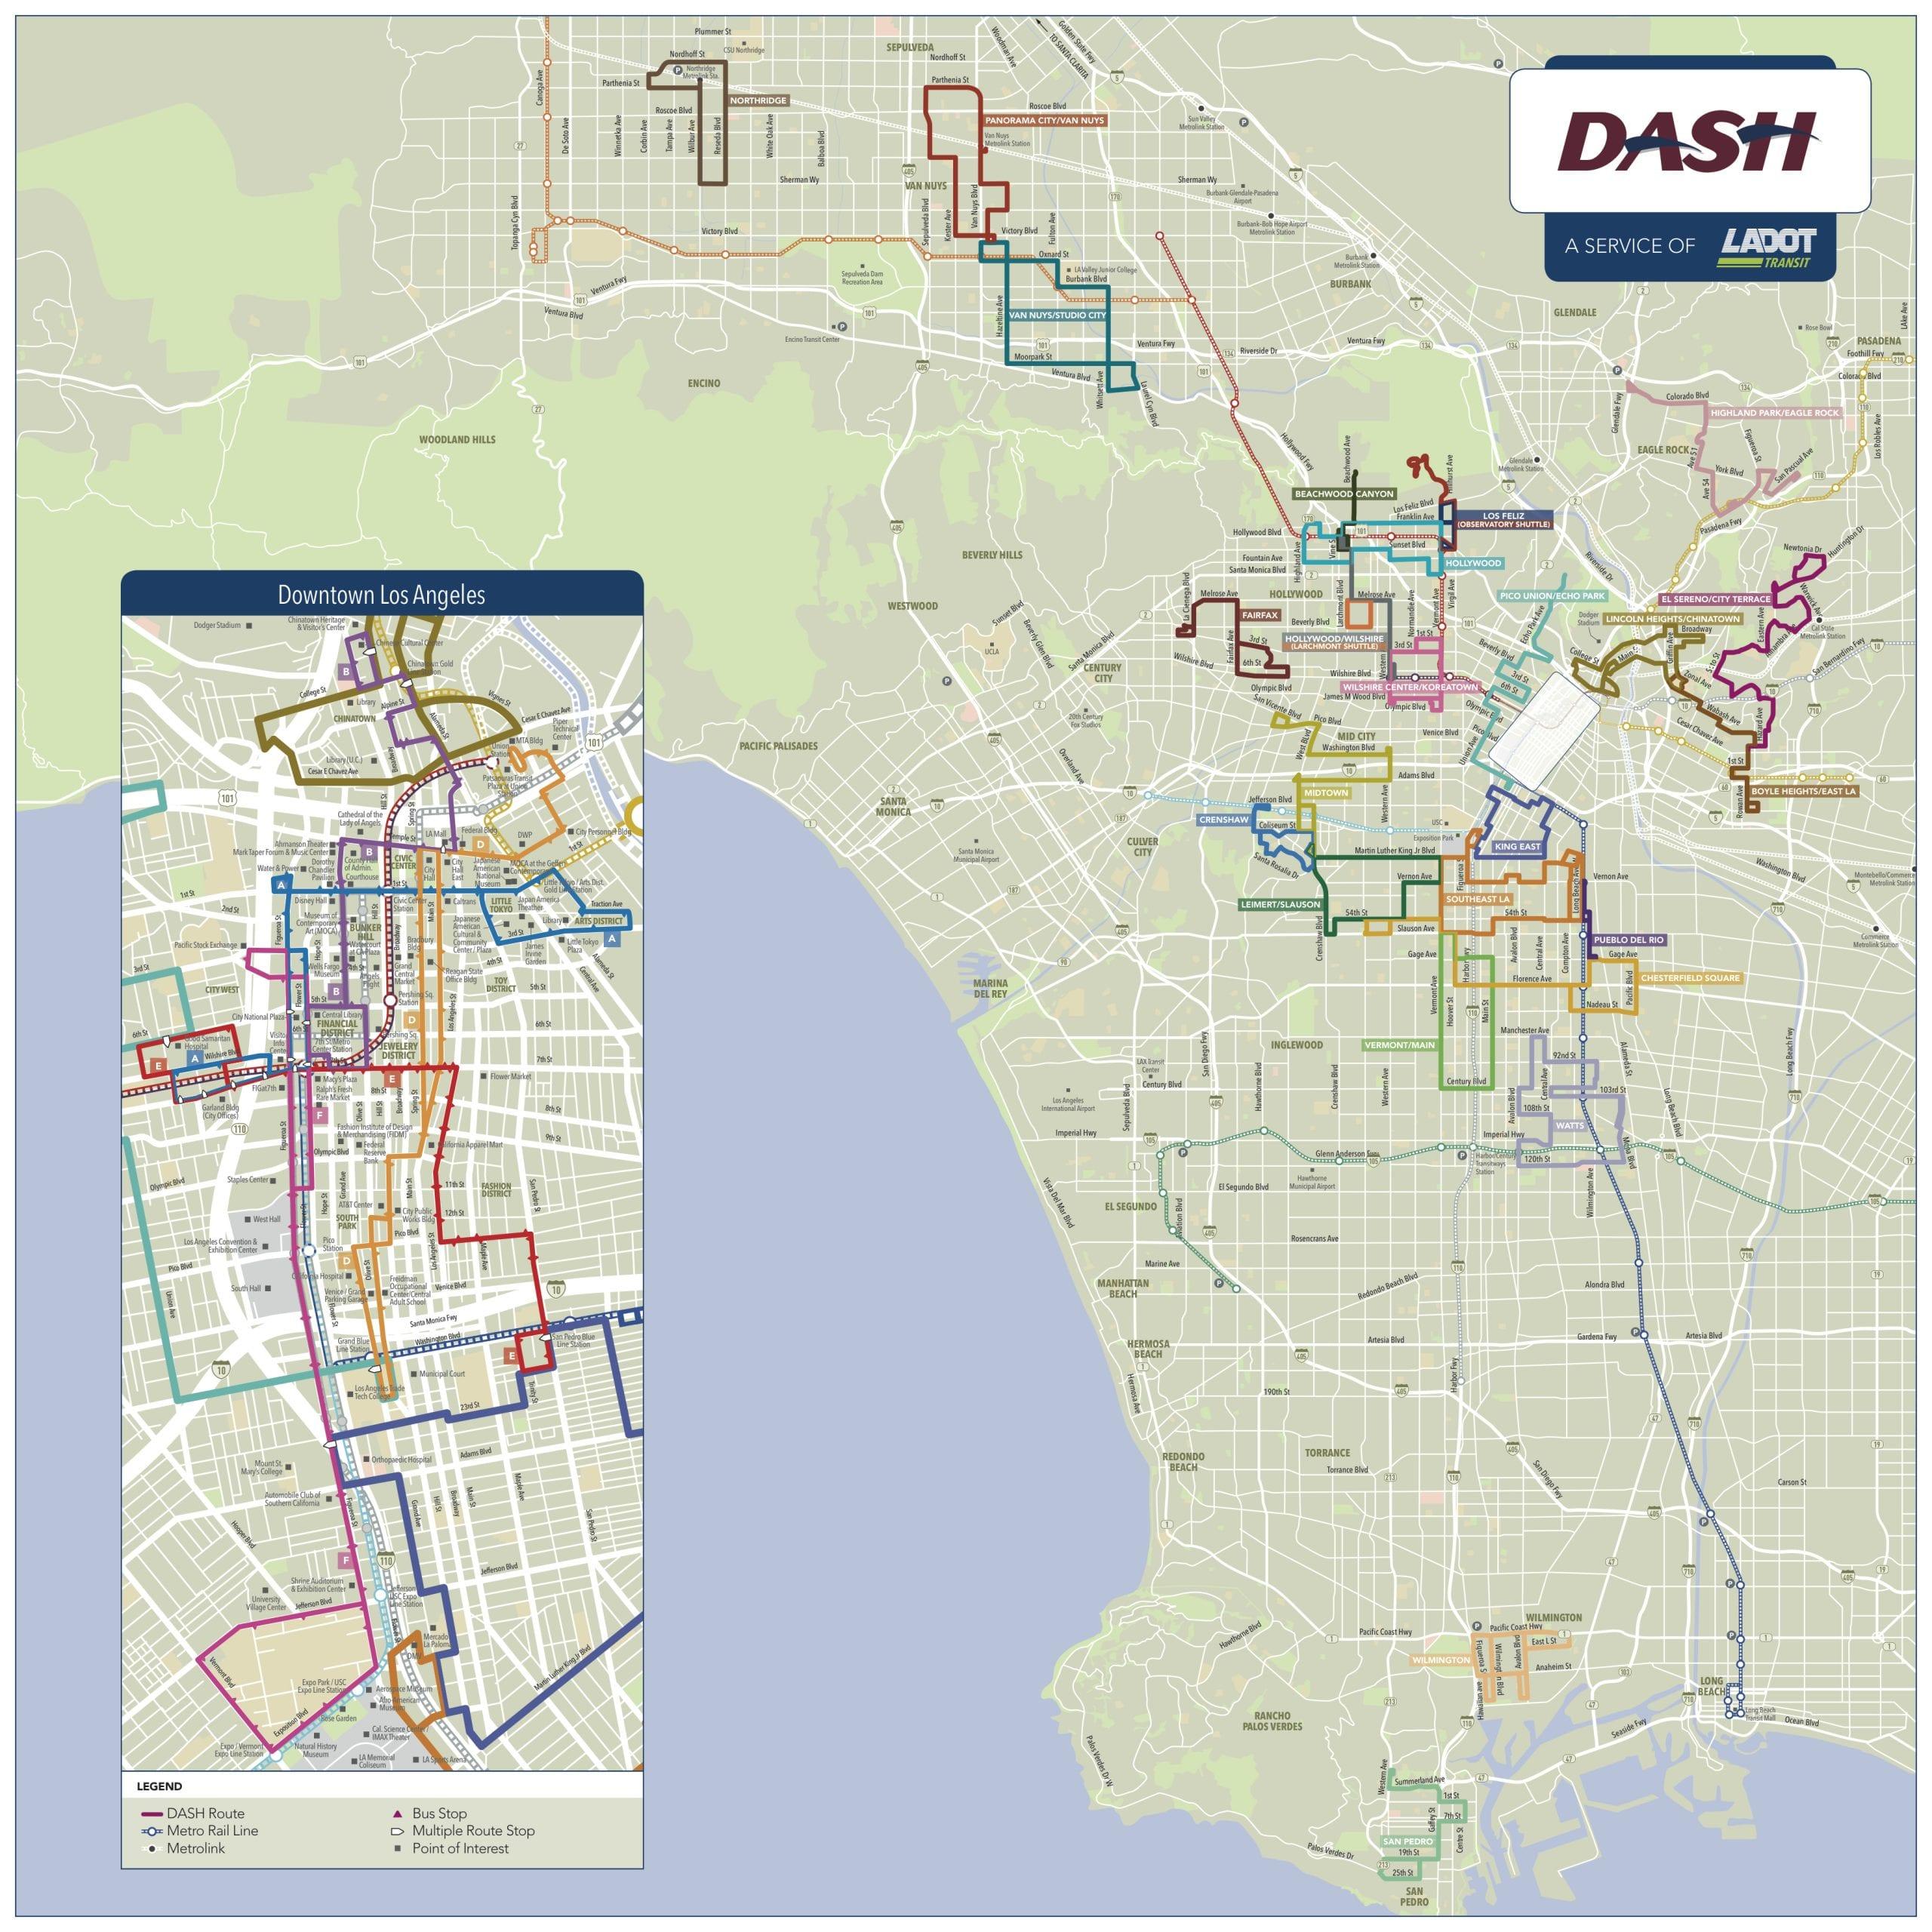 Ladot dash map - Los Angeles dash map (California - USA)